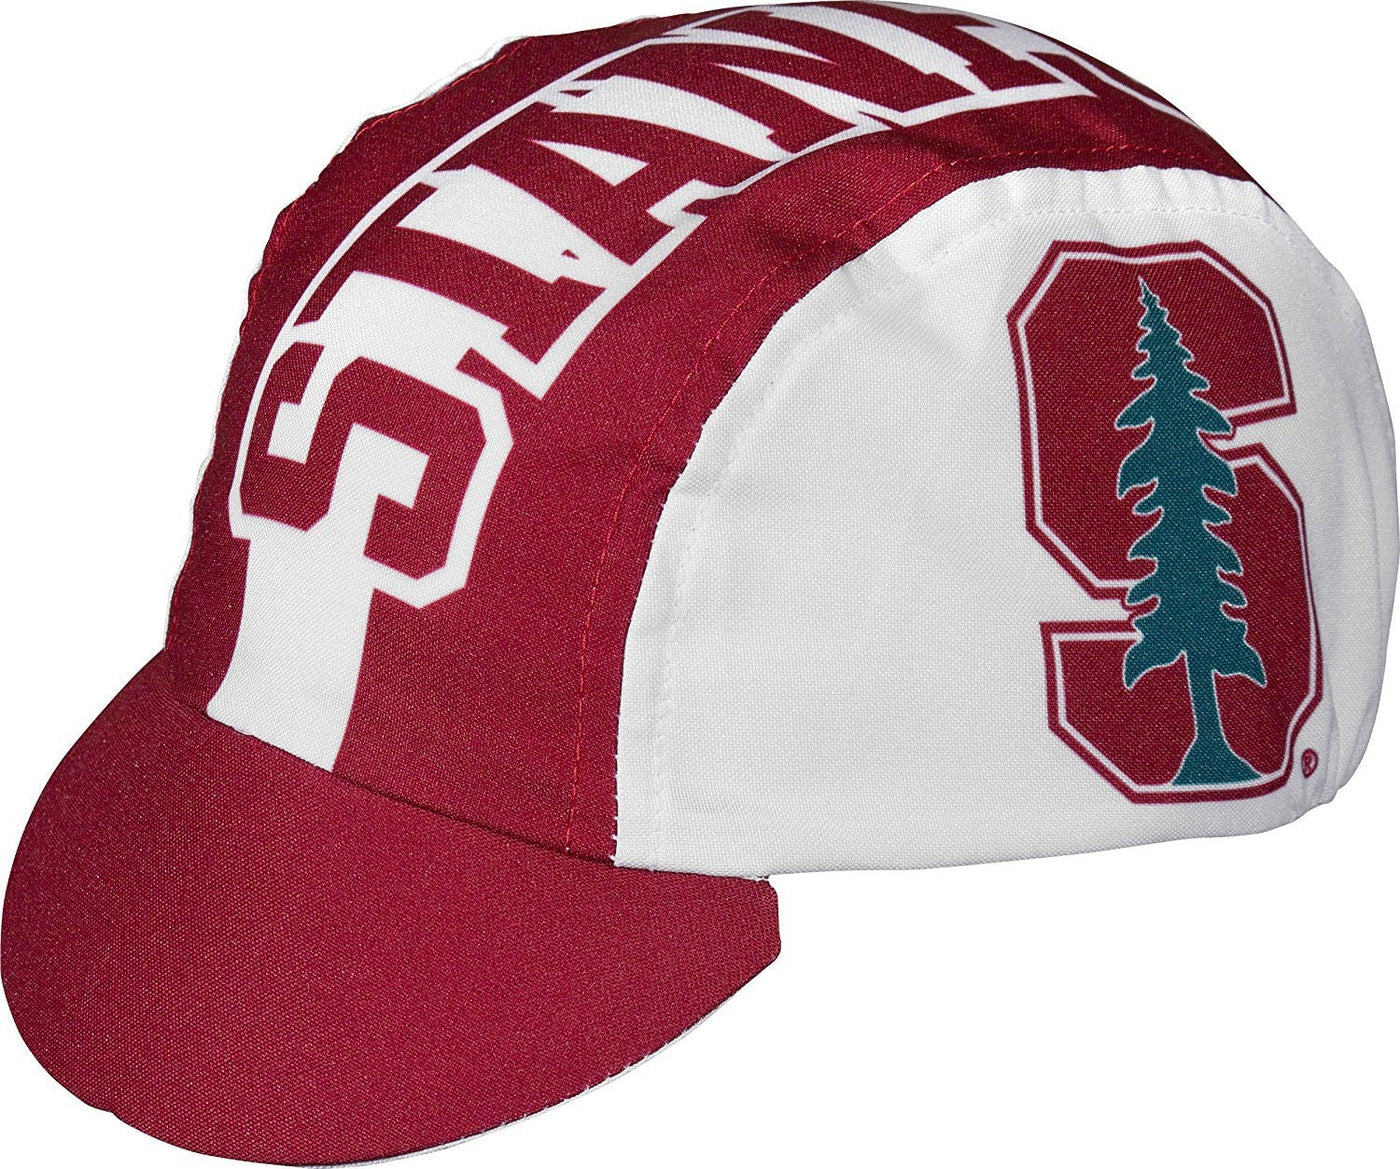 Stanford Cap